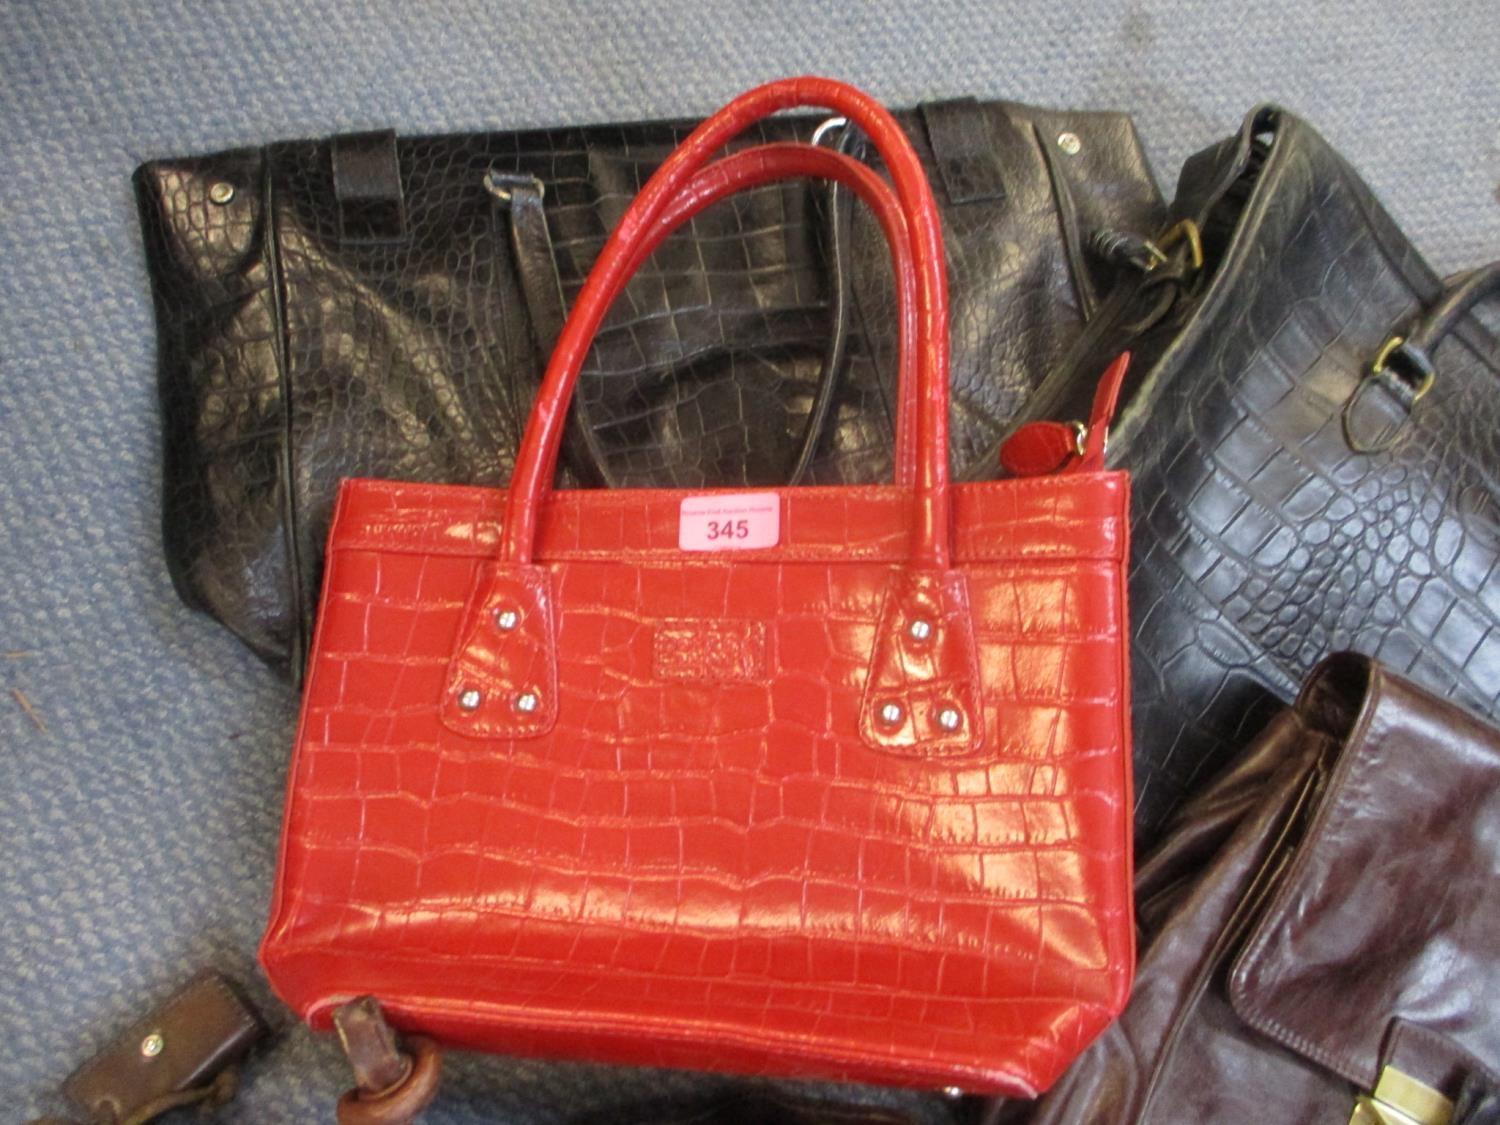 A red Osprey handbag, an Abro black shoulder bag with dustbag, a Levington and Moon black handbag, a - Image 4 of 4